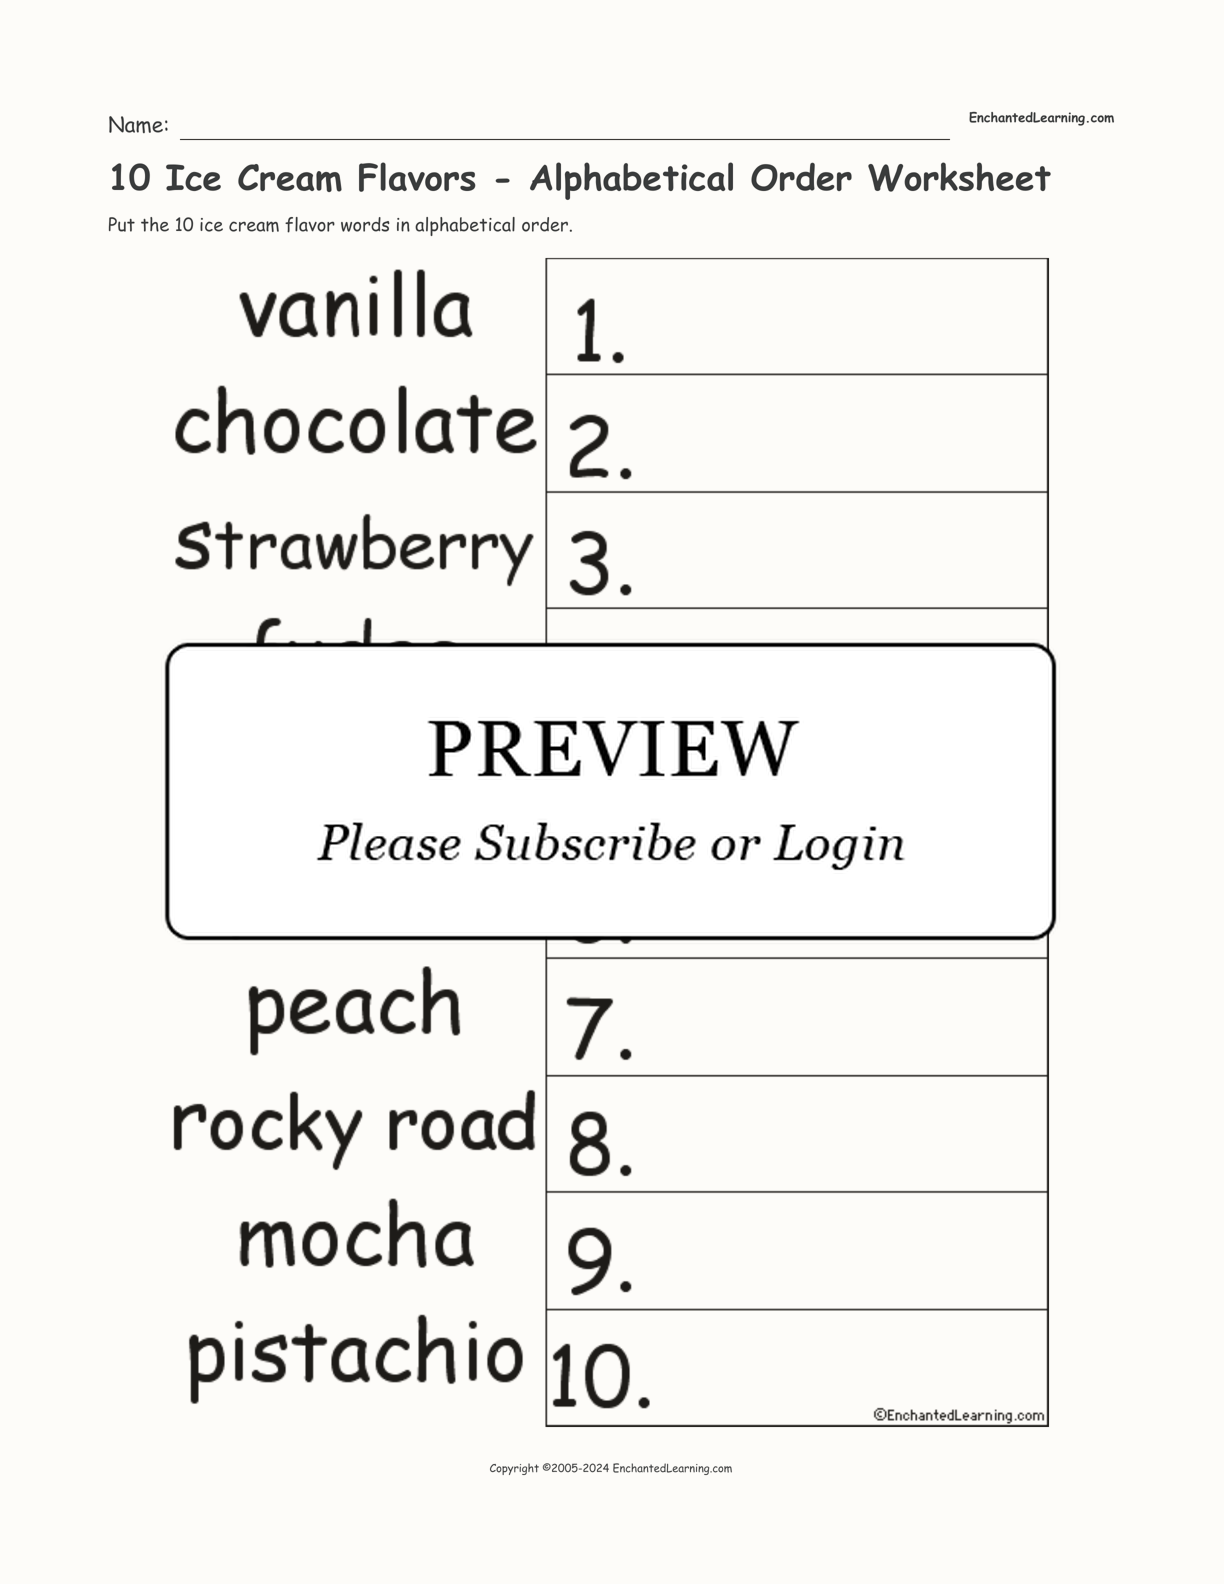 10 Ice Cream Flavors - Alphabetical Order Worksheet interactive worksheet page 1